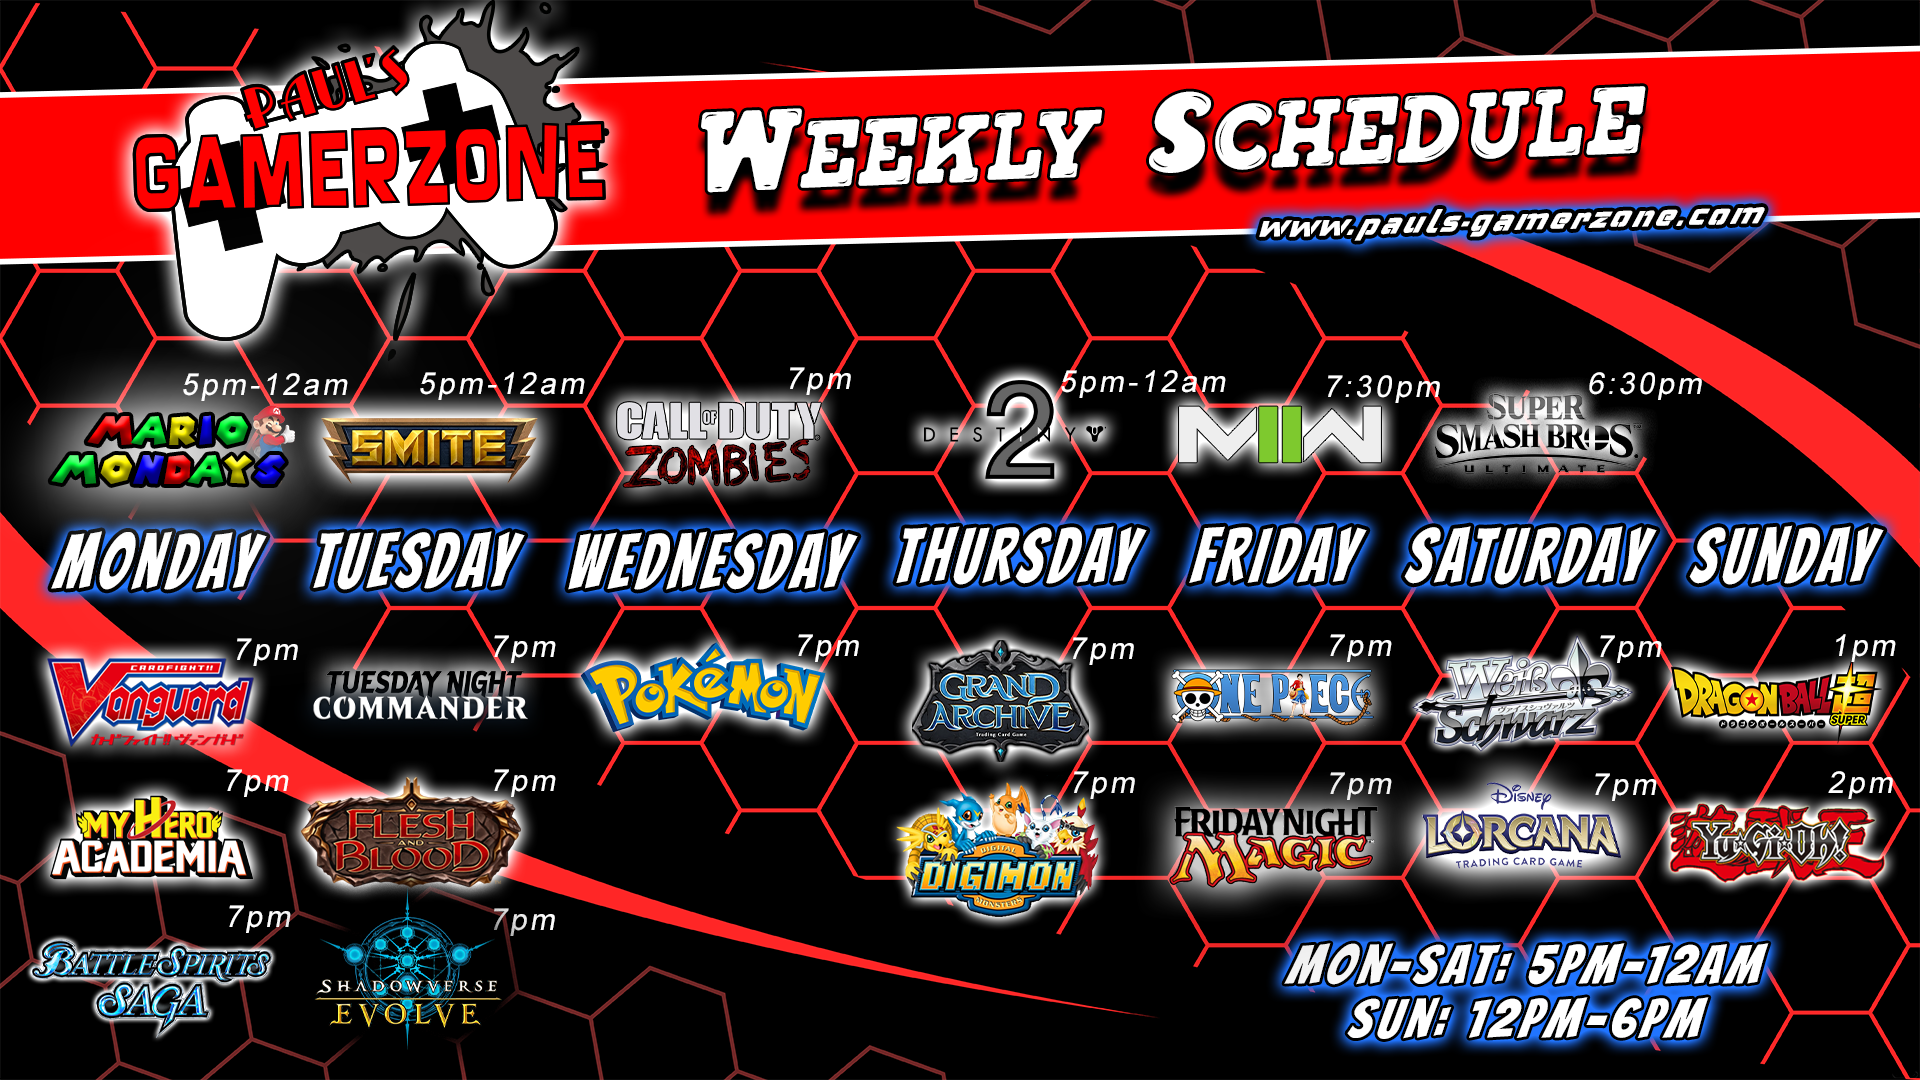 Paul's Gamerzone Weekly Schedule